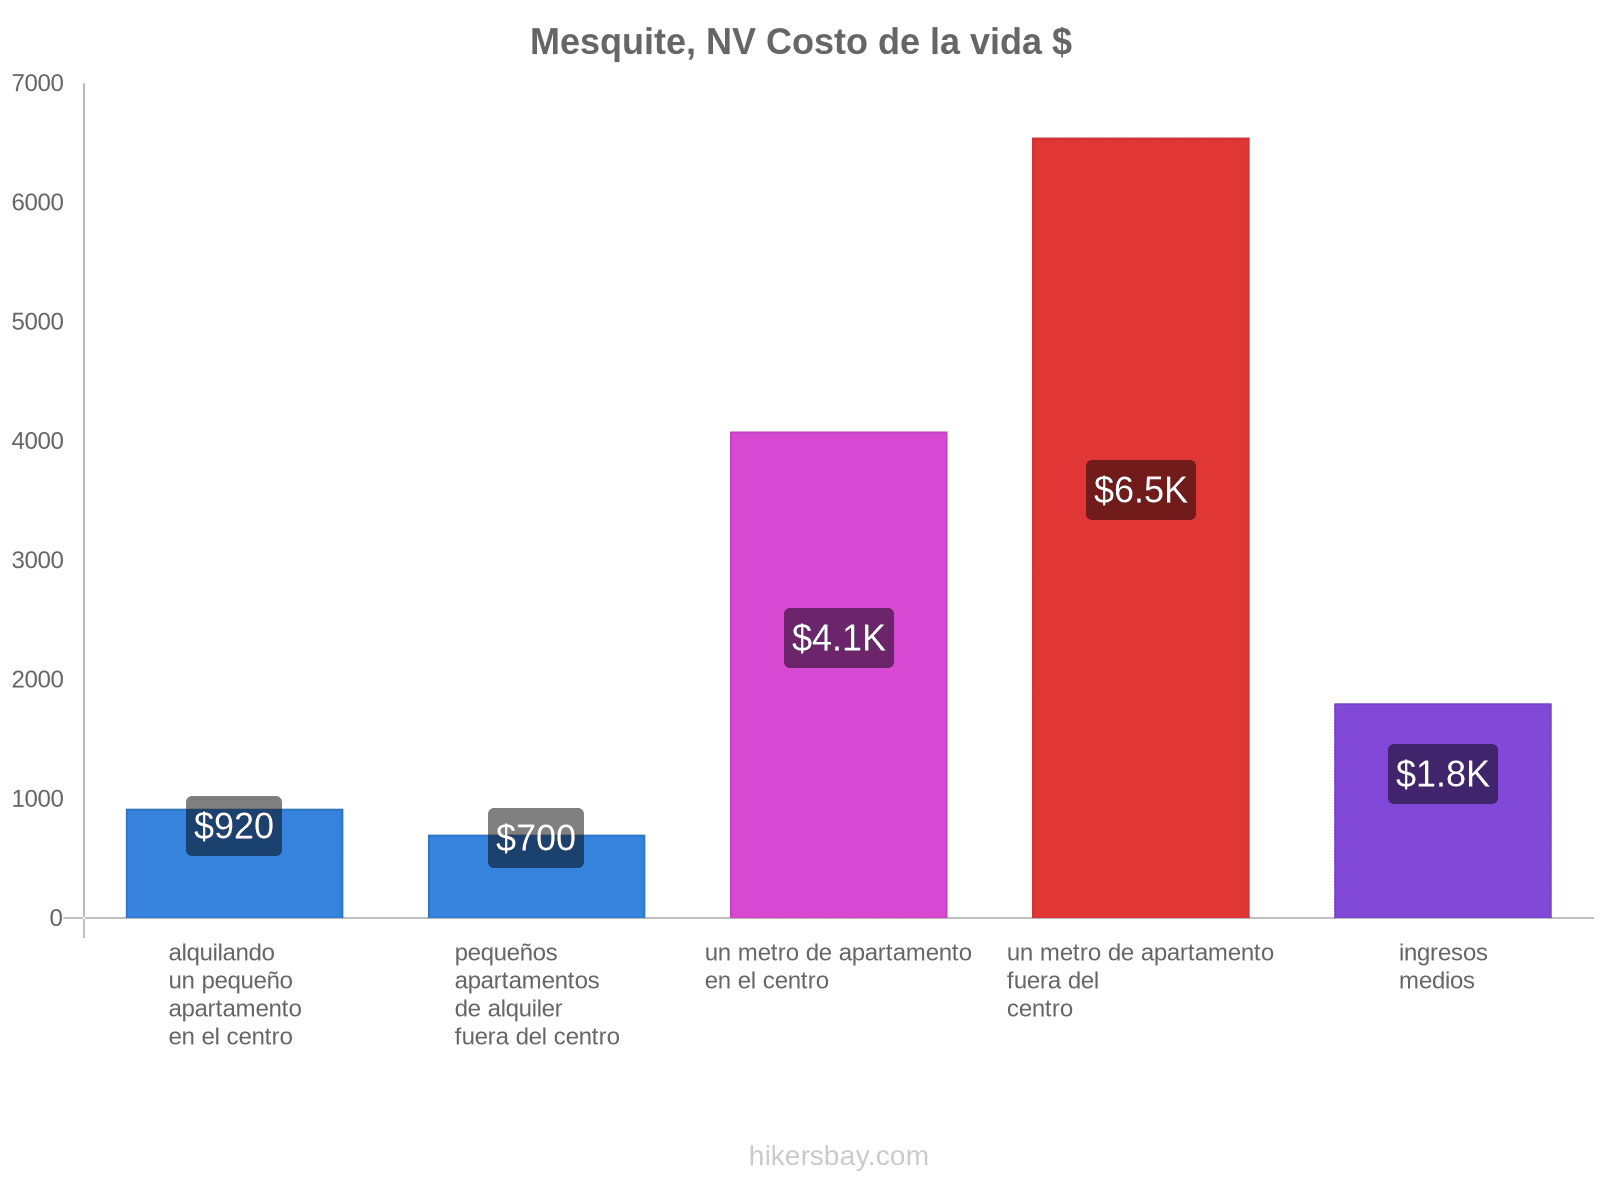 Mesquite, NV costo de la vida hikersbay.com